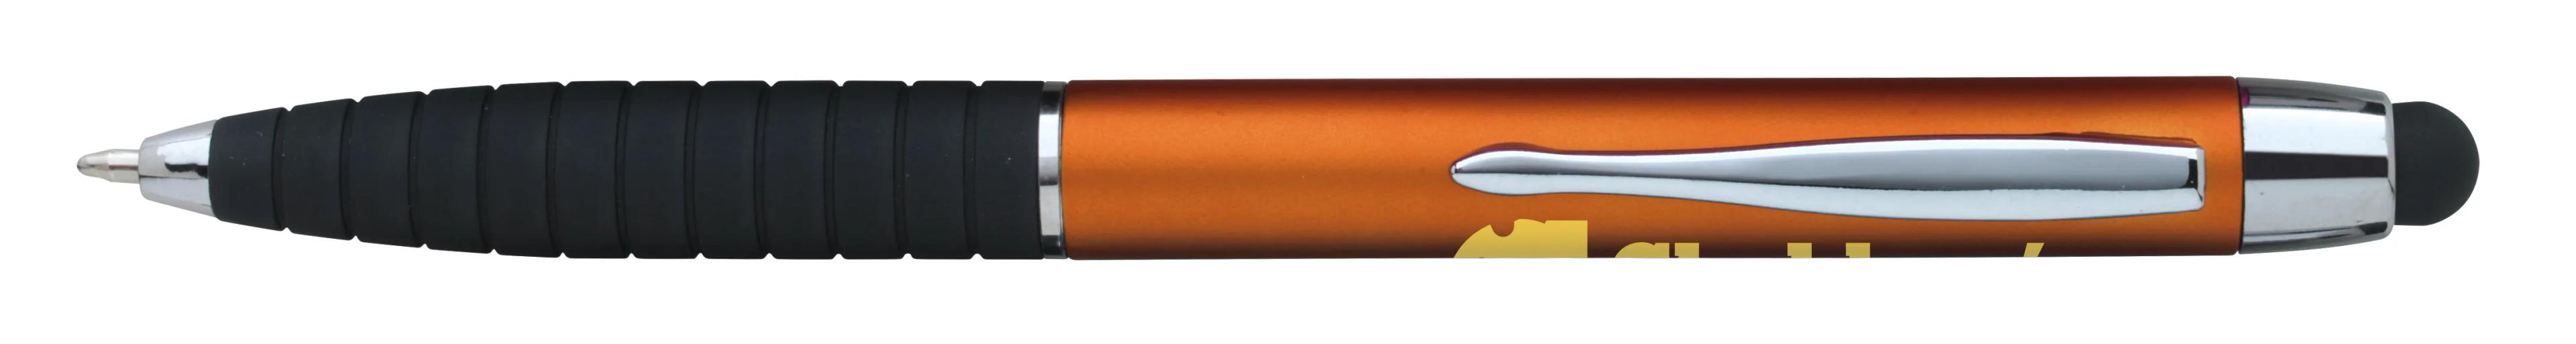 Metallic Cool Grip Stylus Pen 31 of 43